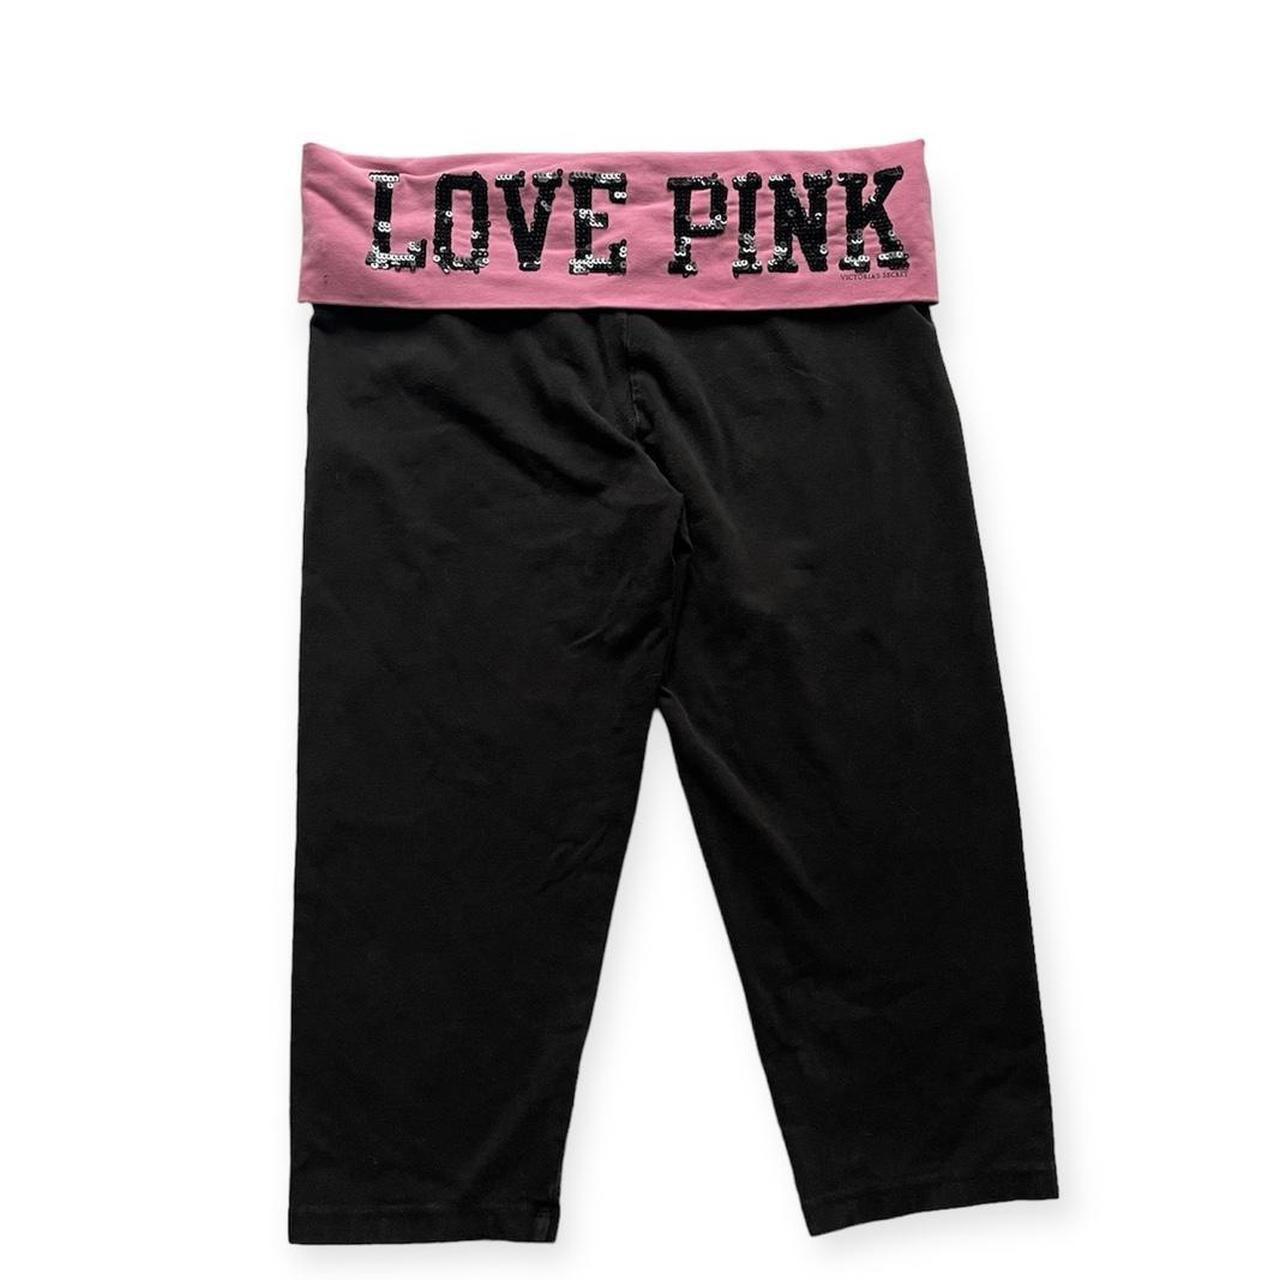 Victoria's Secret Pink Black Leggings Size M - 50% off